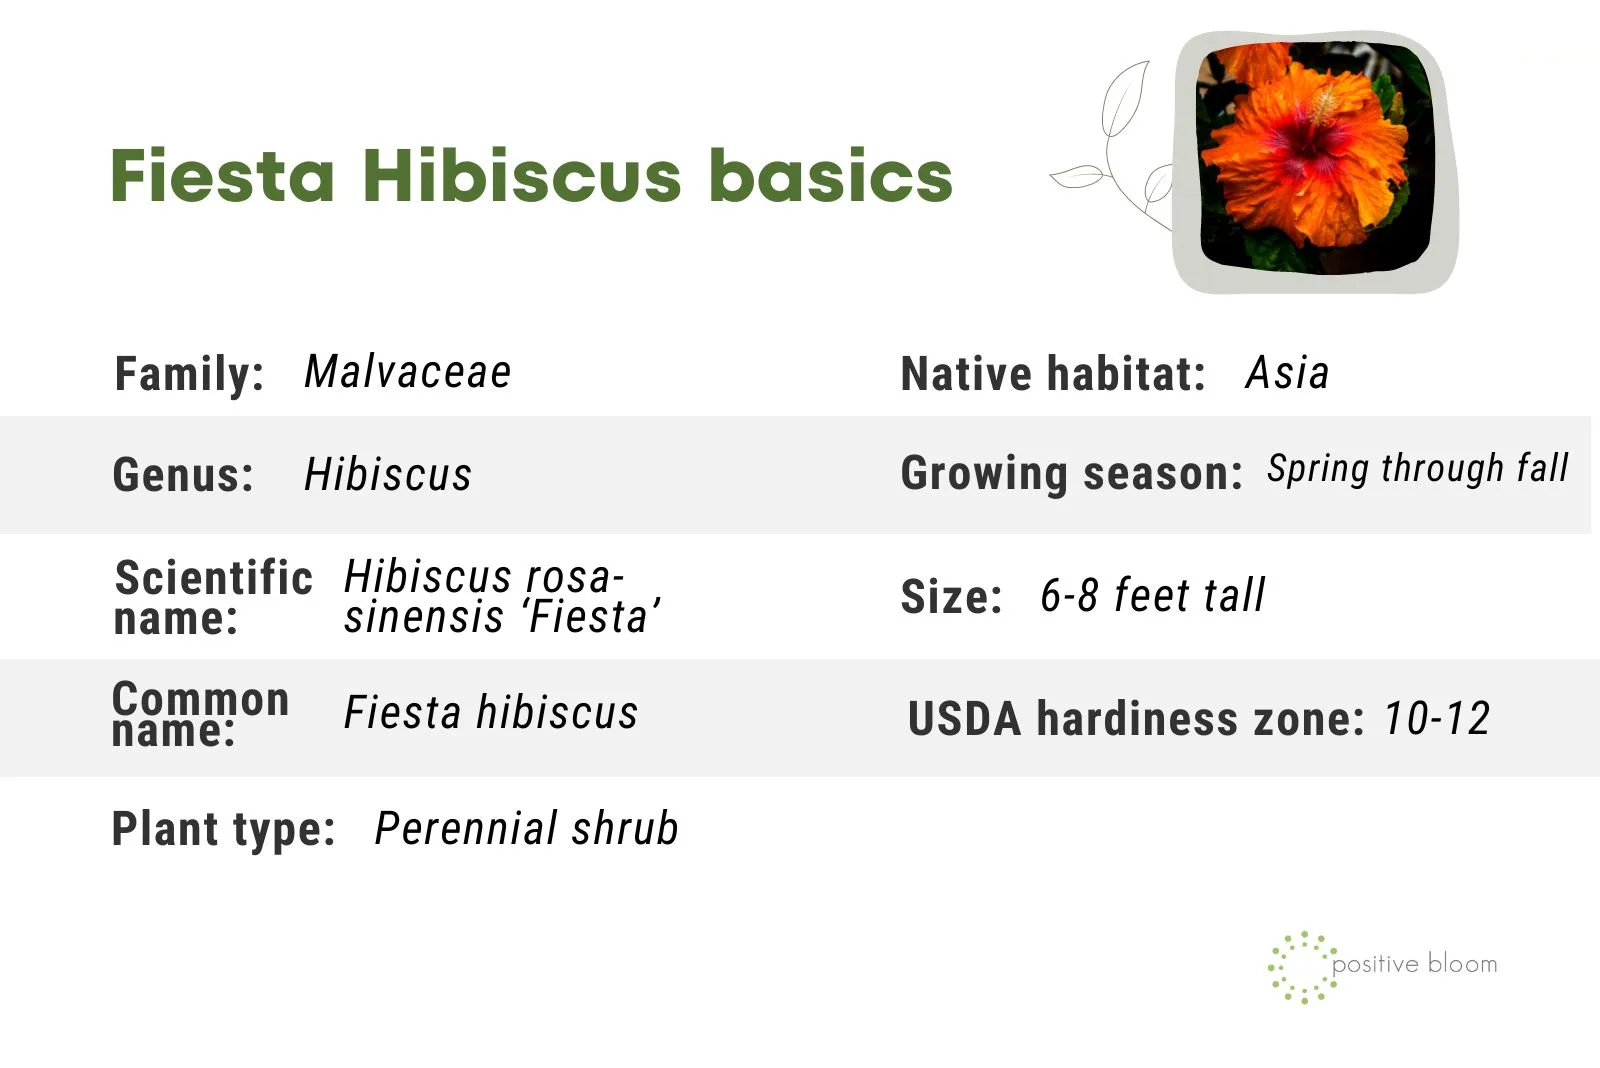 Fiesta Hibiscus basics